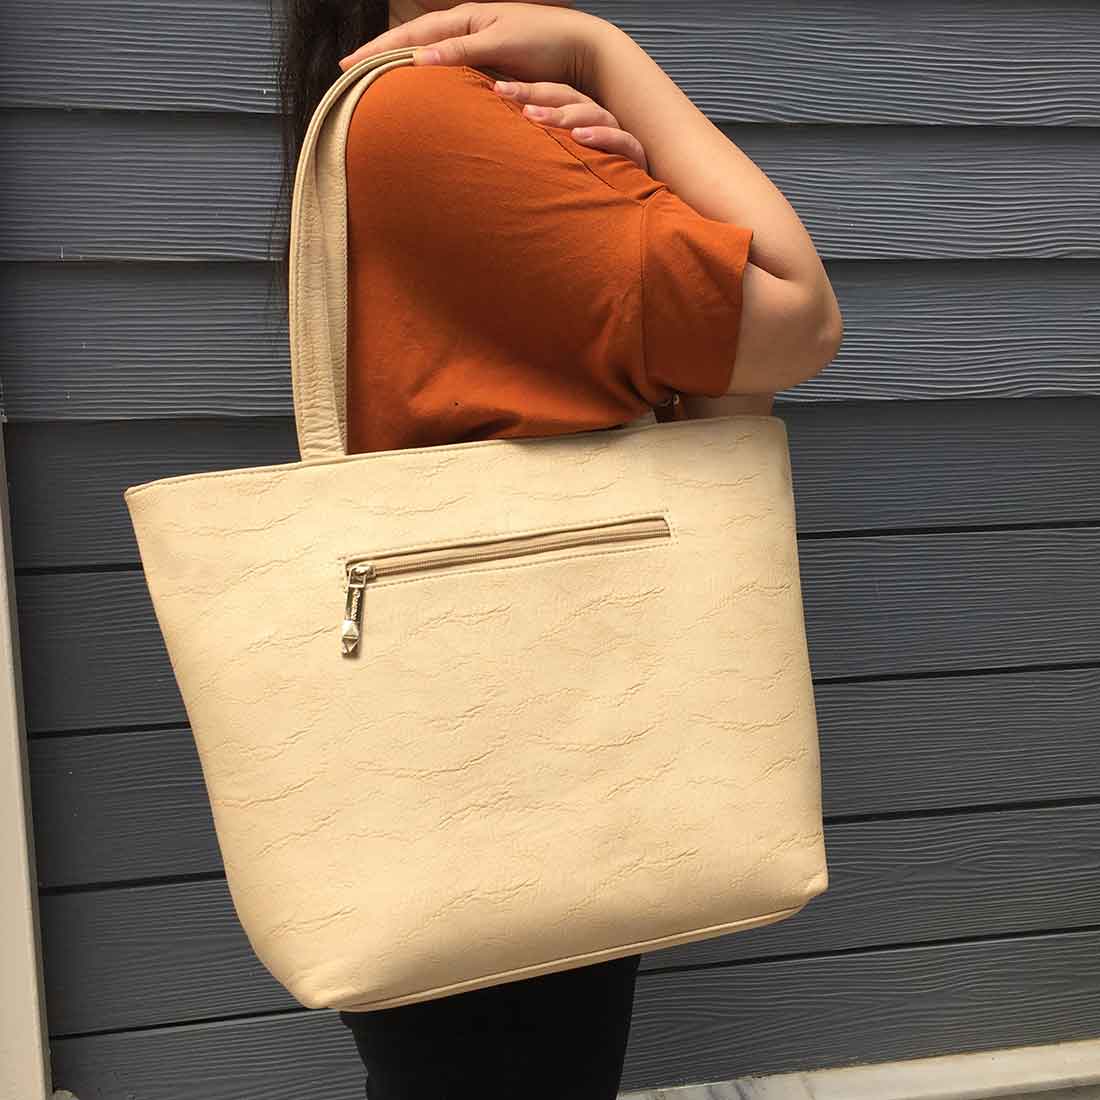 Handbags for Women  - Office Bags for Women - ApkaMart